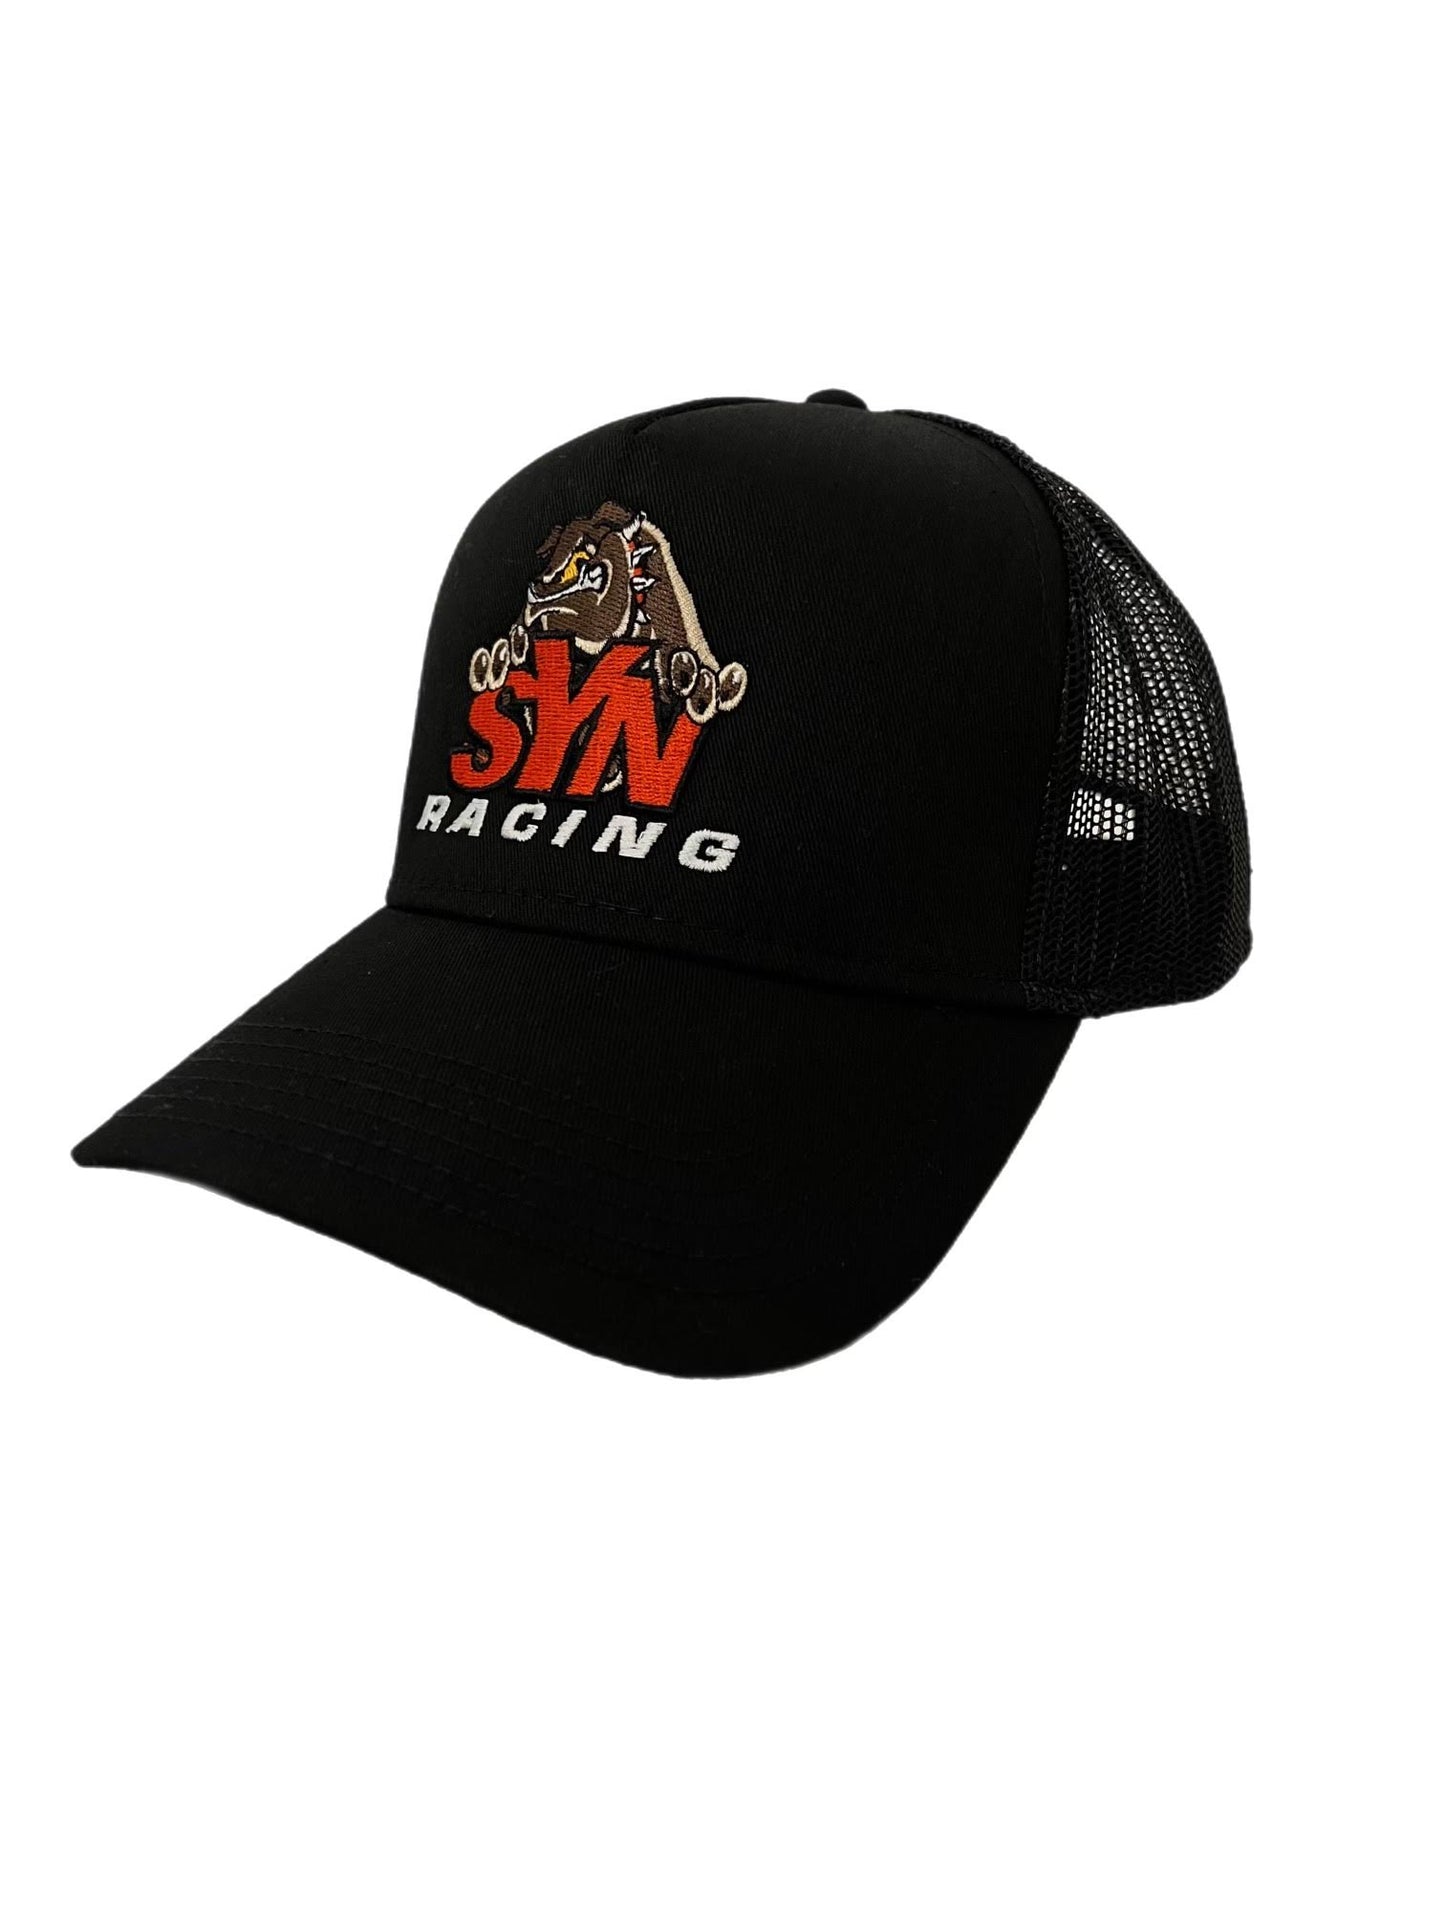 Syndi Racing Trucker Hat